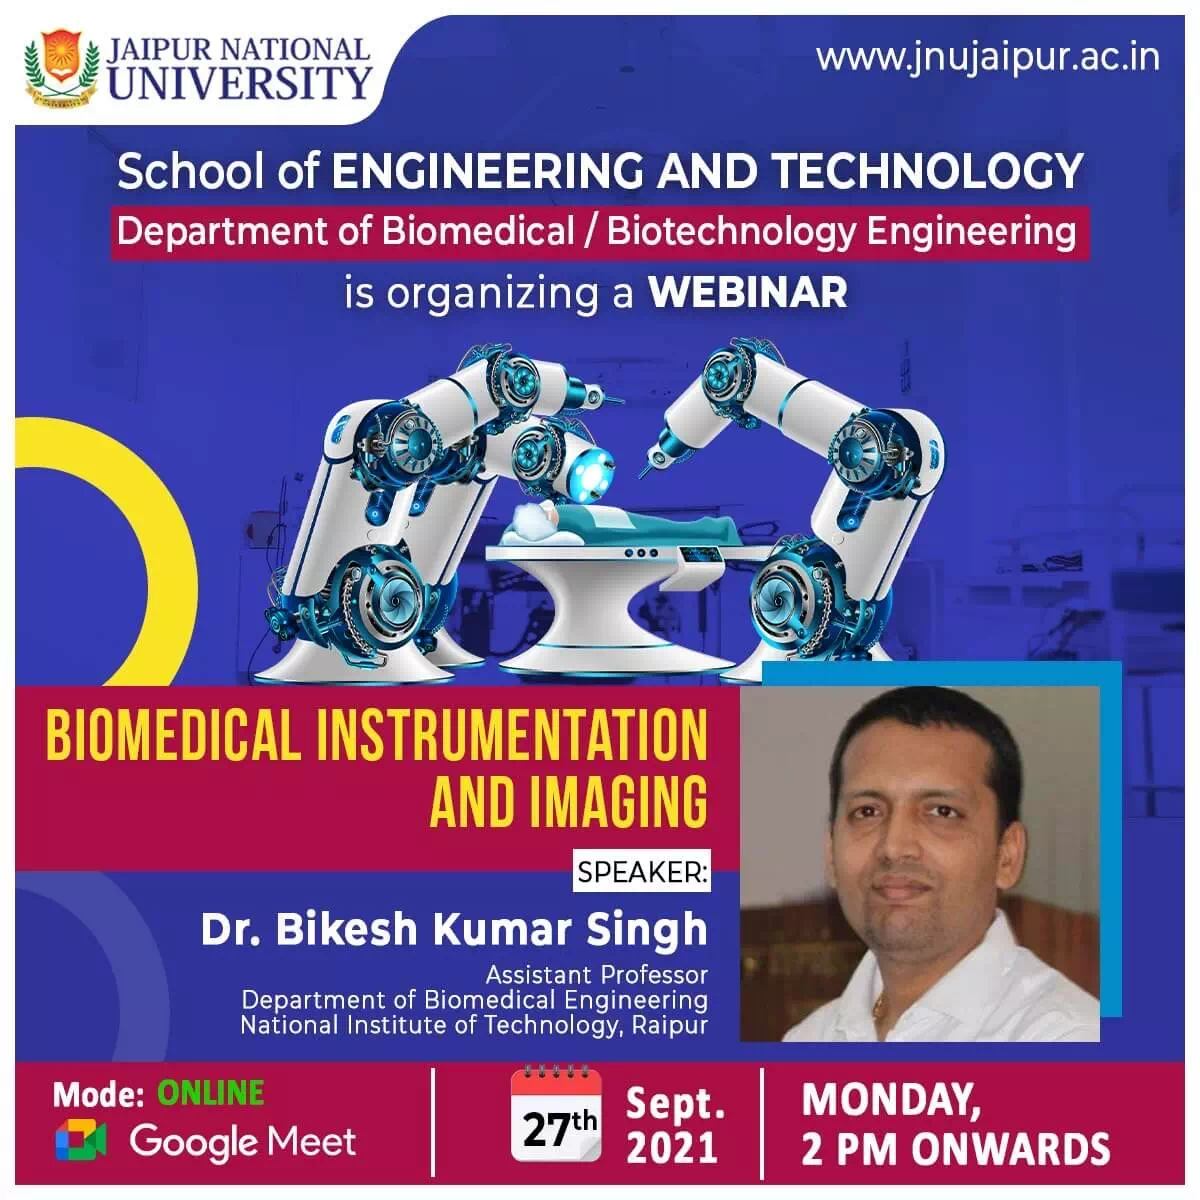 School of Engineering & Technology's Departments of Biomedical and Biotechnology Engineering